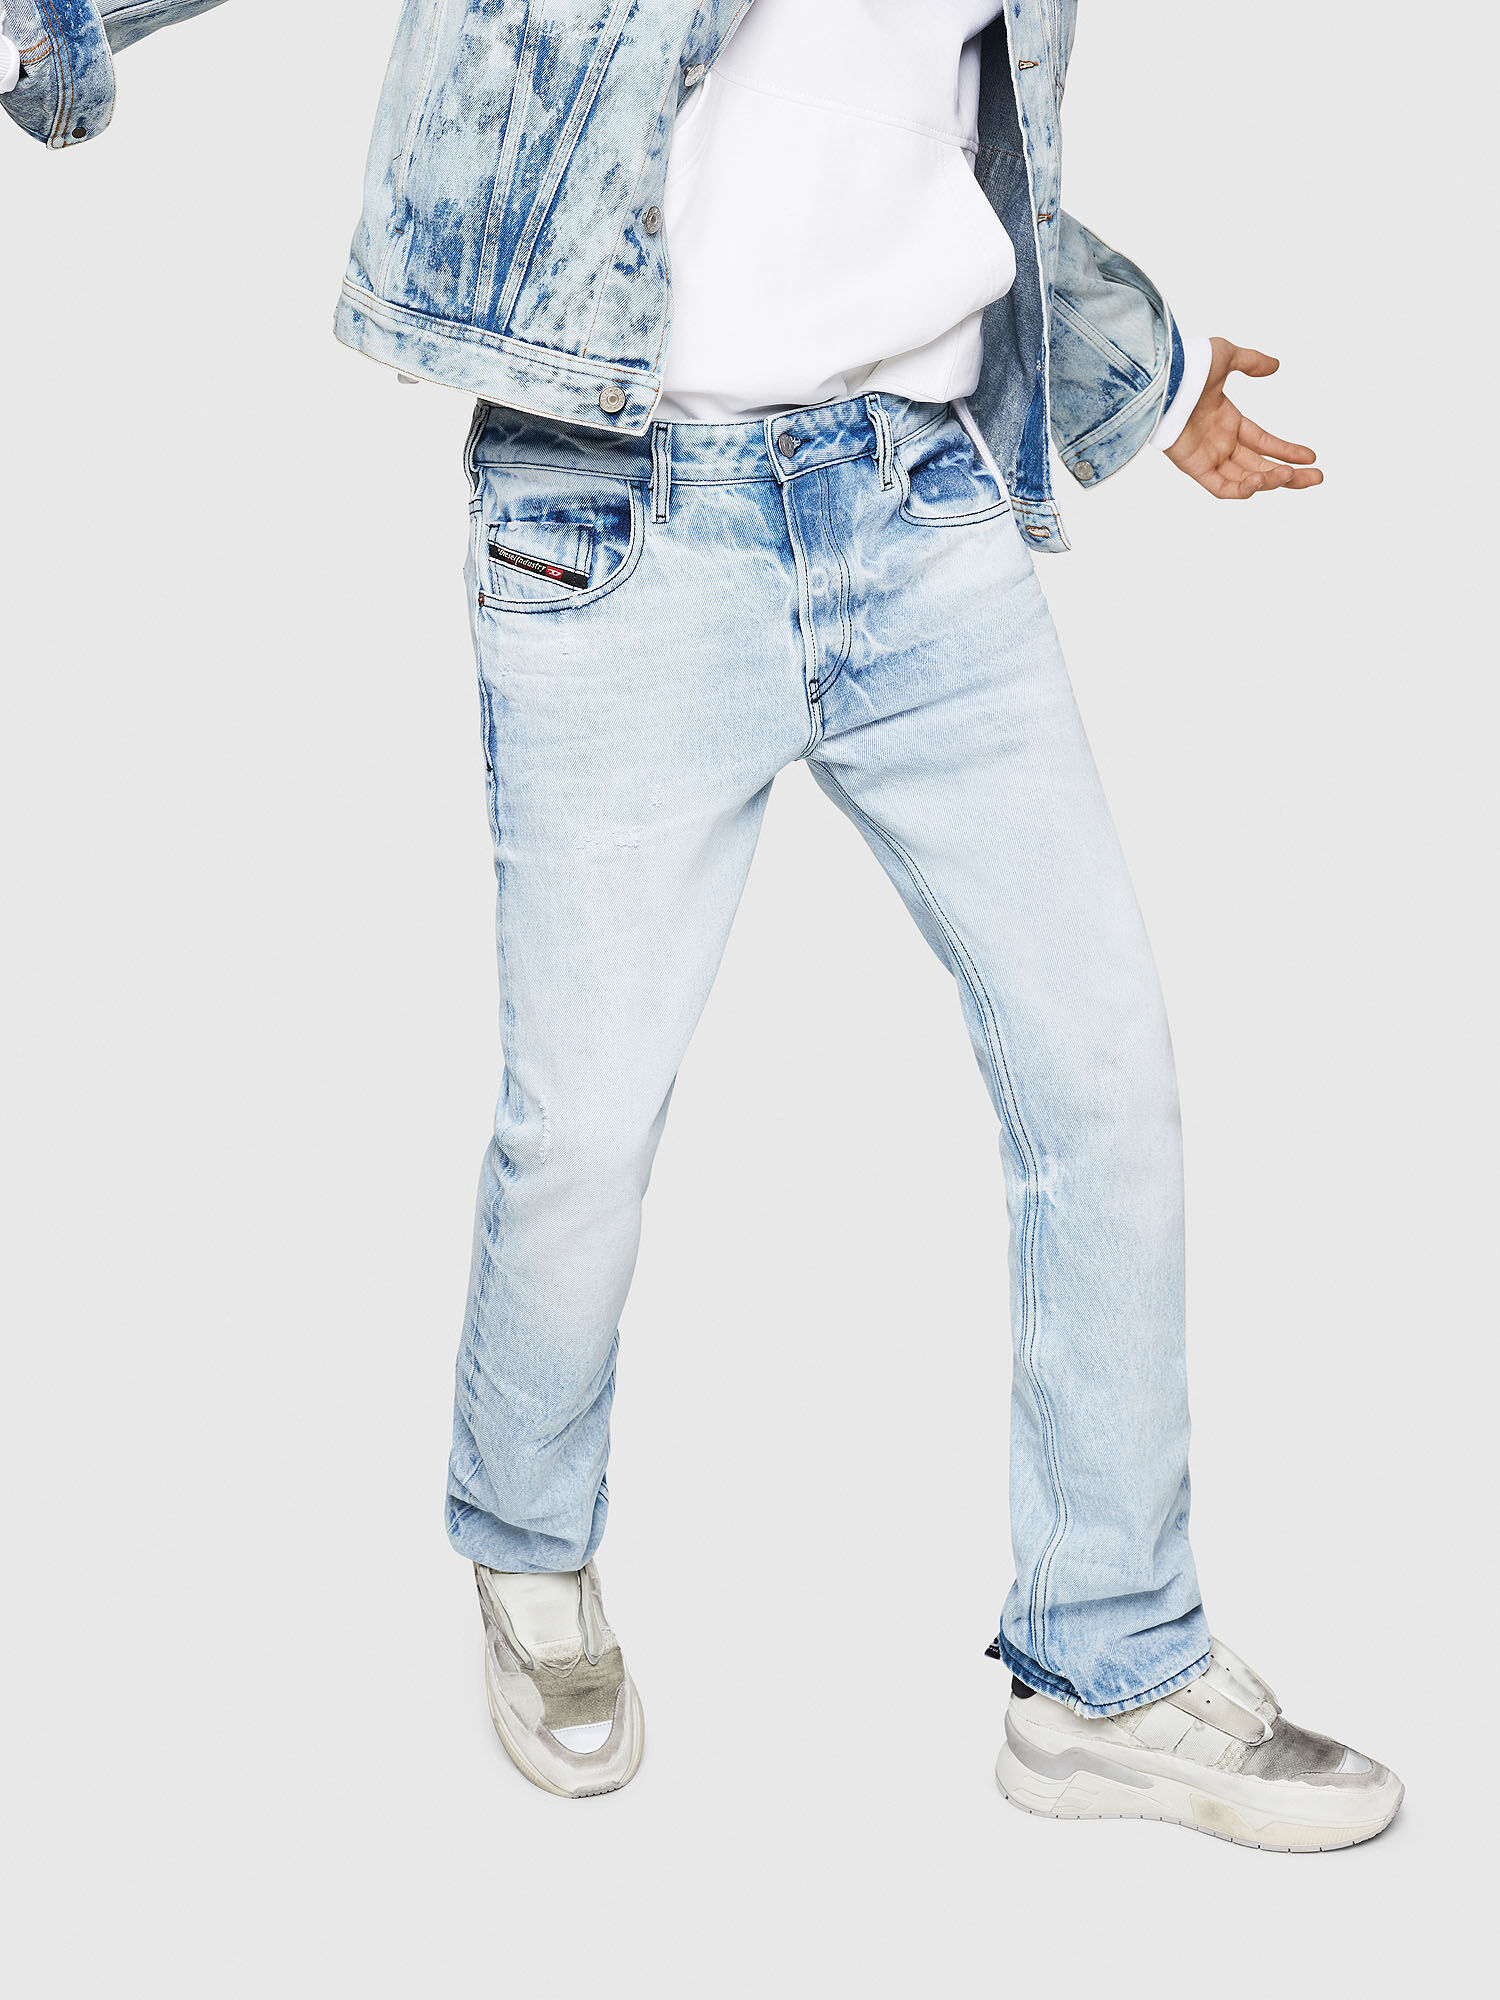 mens light blue bootcut jeans